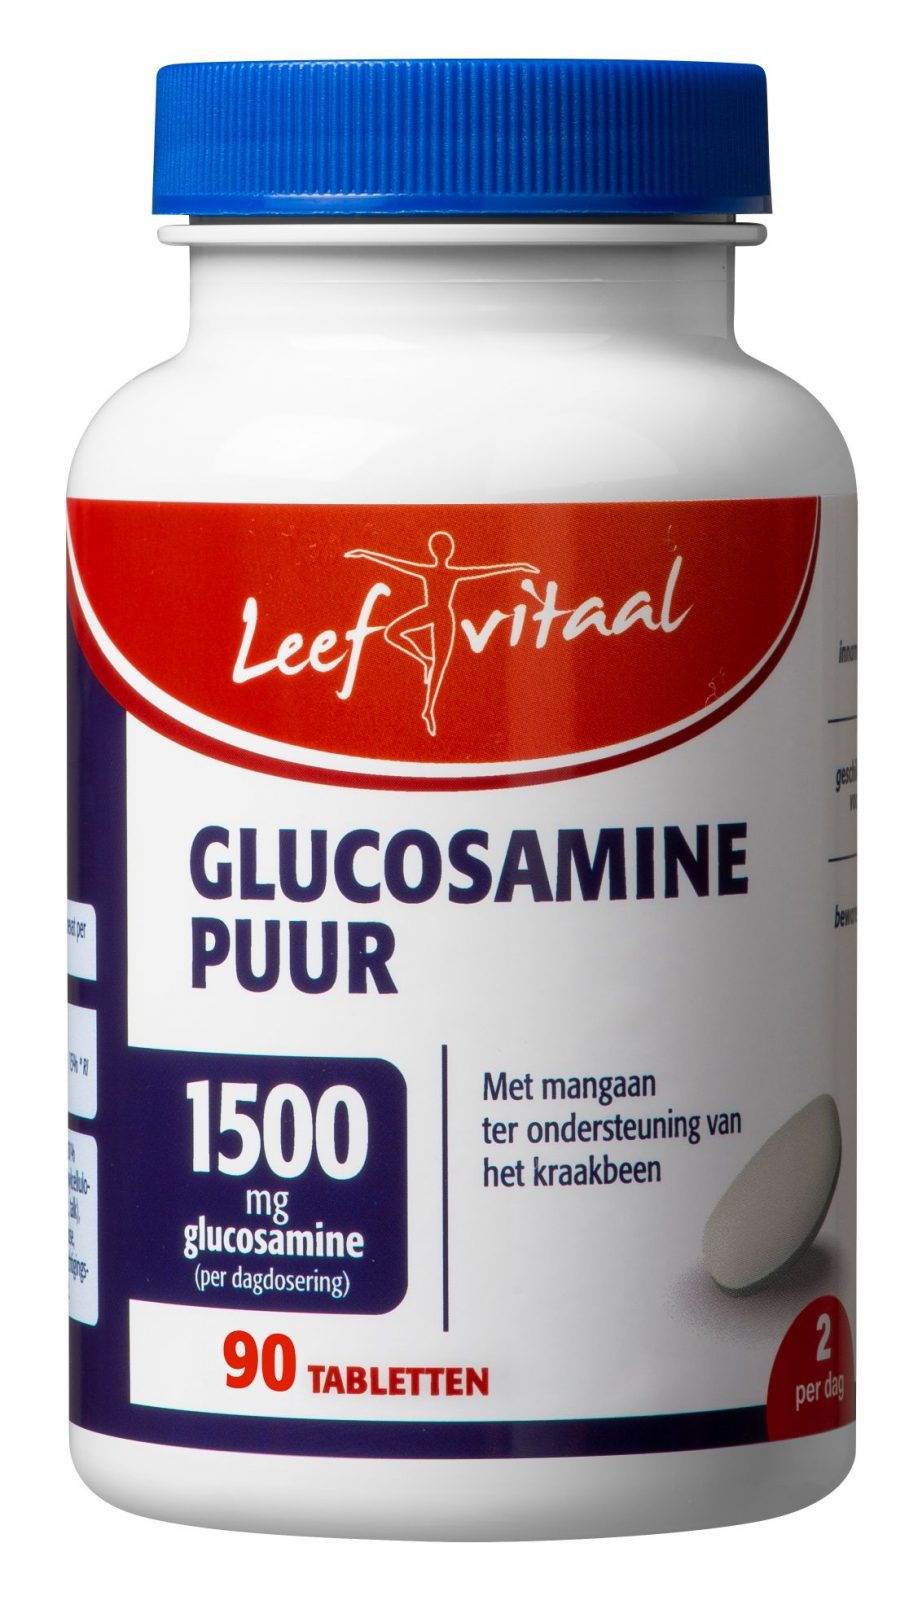 nieuws Aap Helder op Glucosamine puur - Leefvitaal